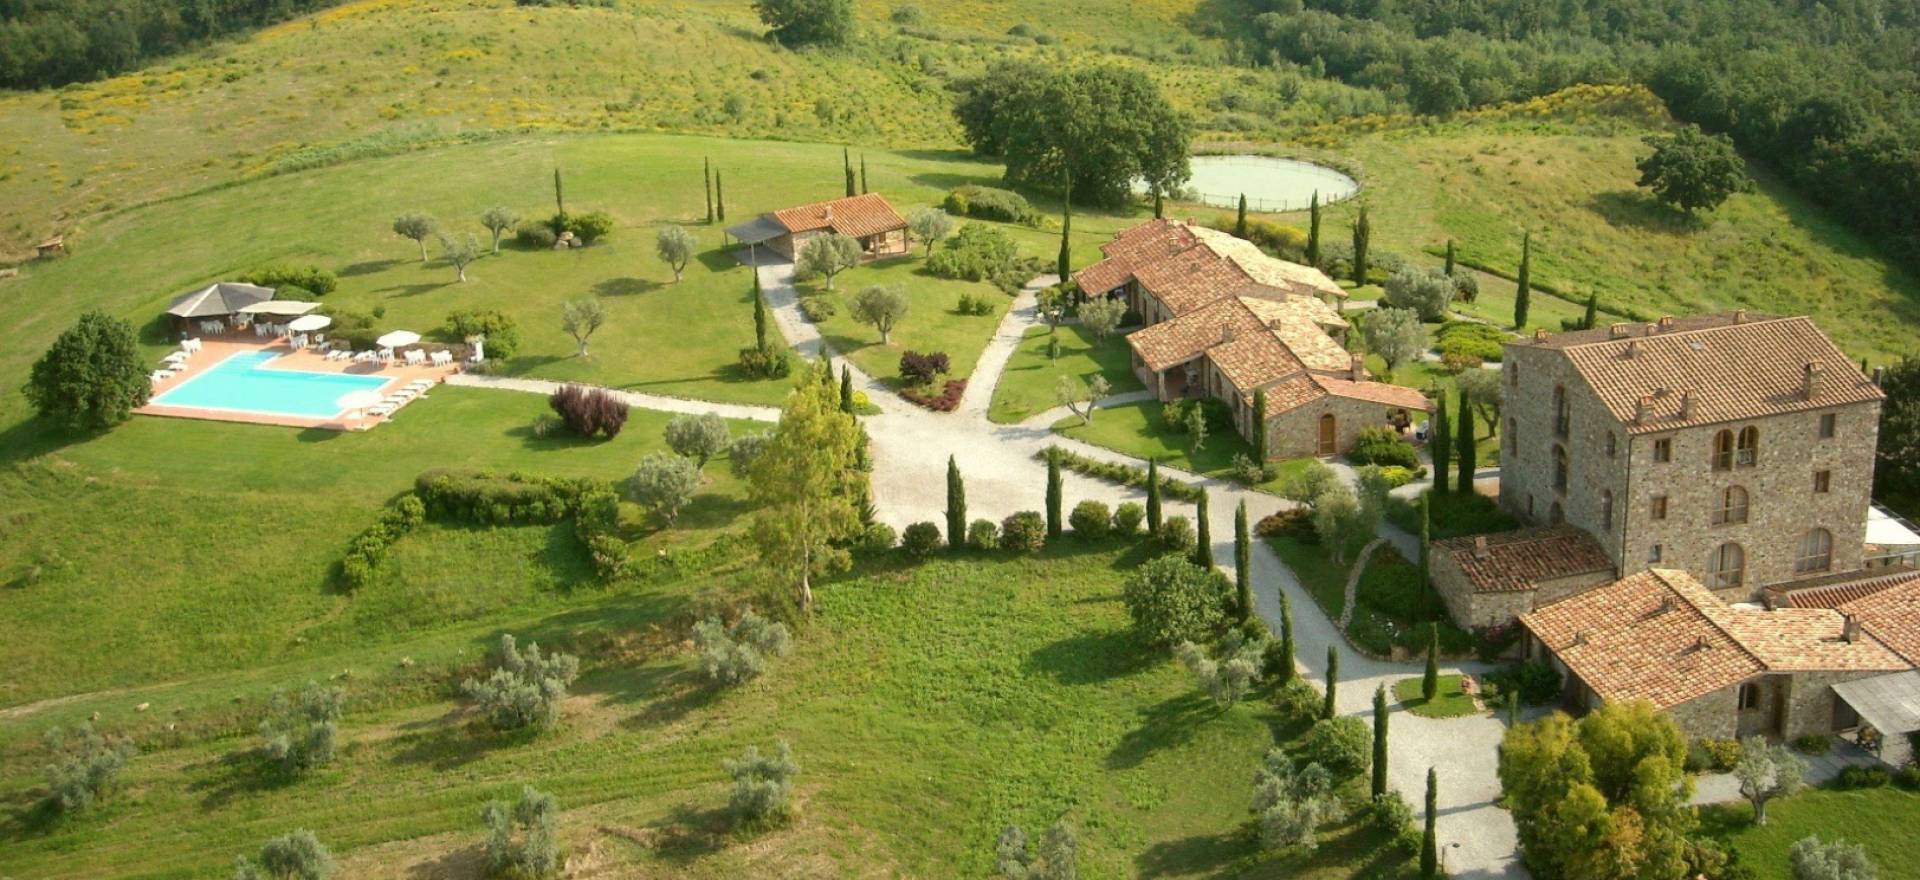 Agriturismo Toscana Agriturismo in posizione tranquilla e rurale in Toscana